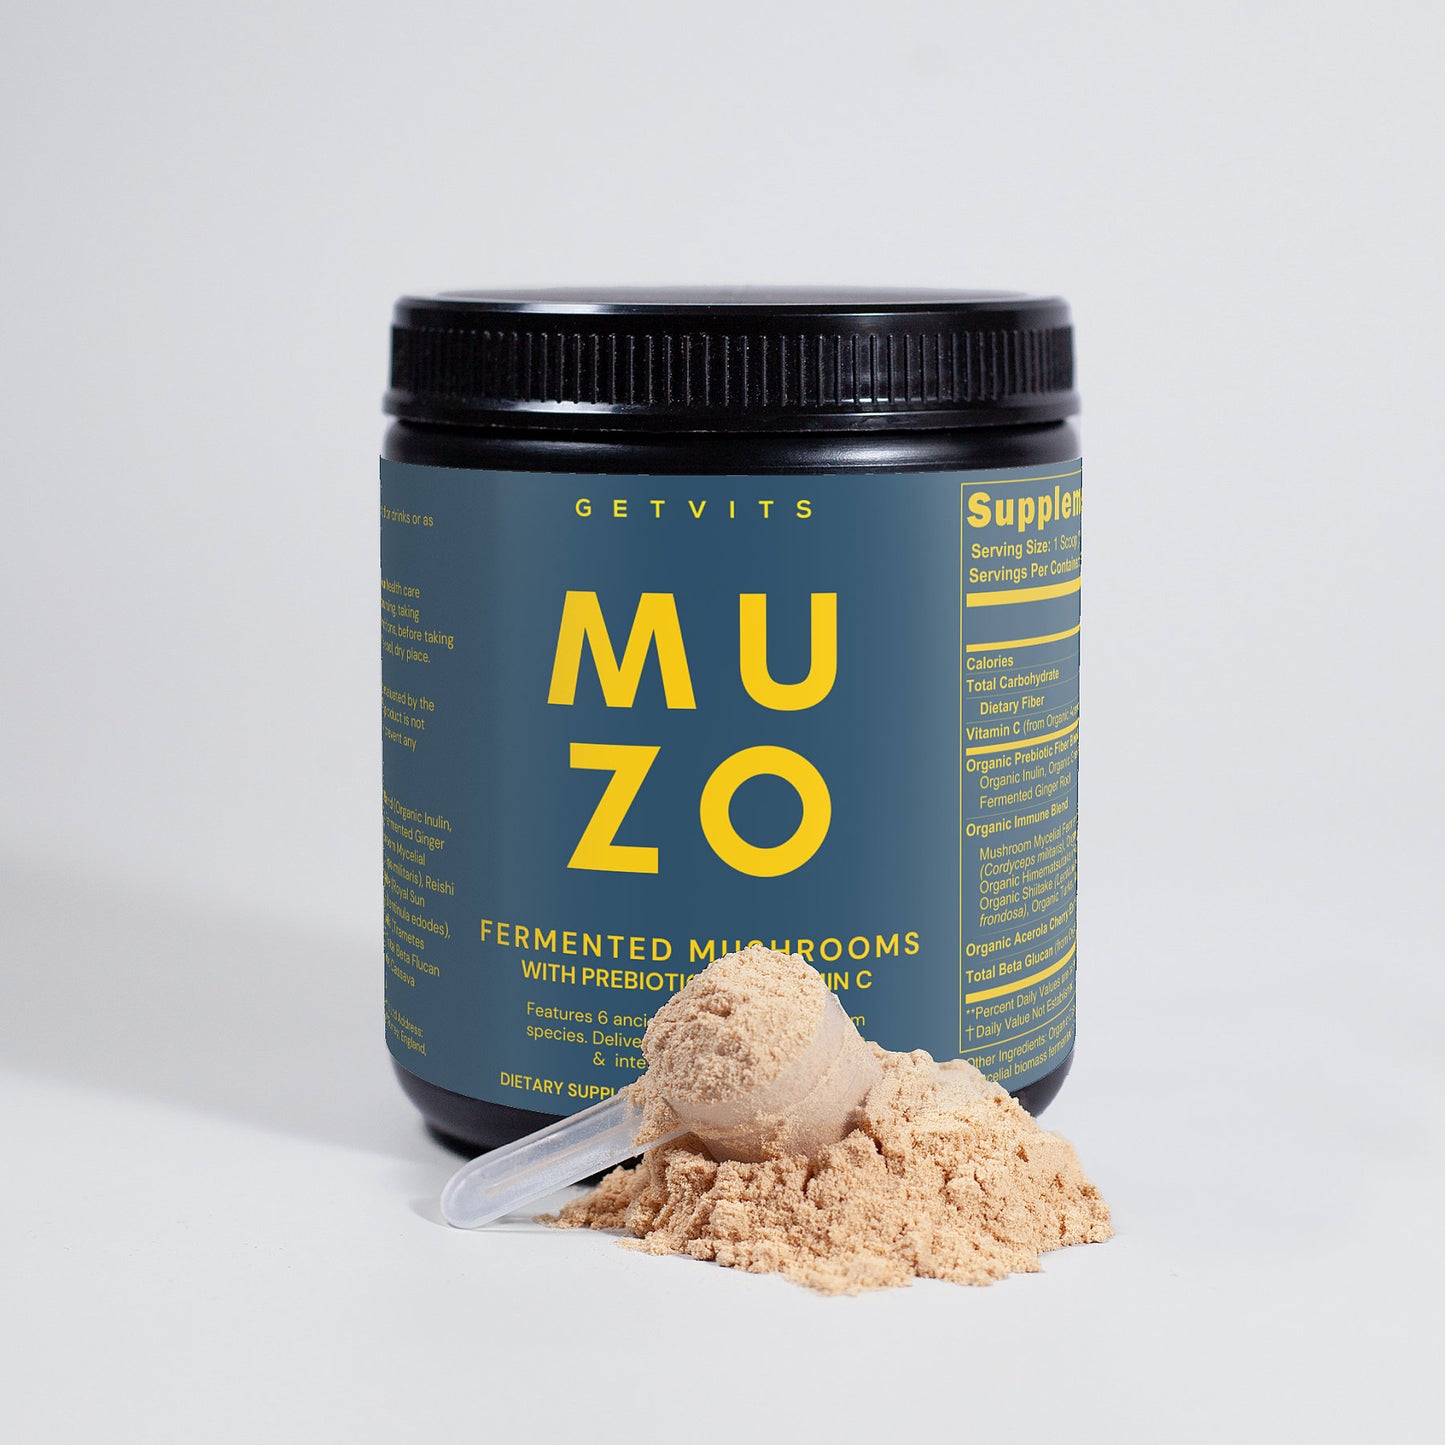 MUZO (Fermented Mushroom Blend)